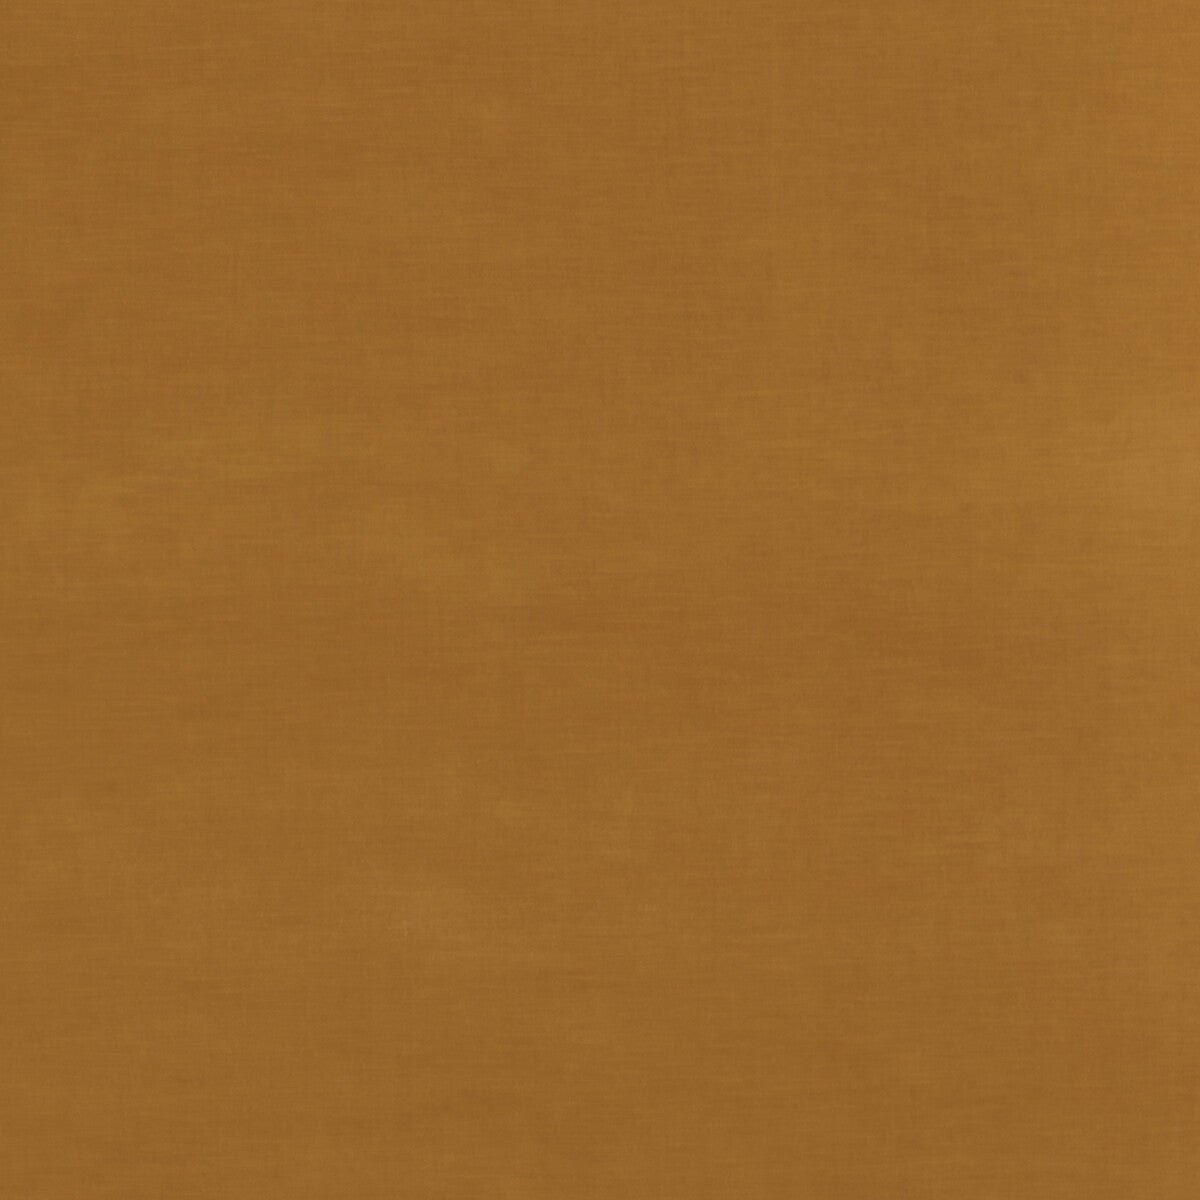 Quintessential Velvet fabric in ochre color - pattern ED85359.840.0 - by Threads in the Quintessential Velvet collection